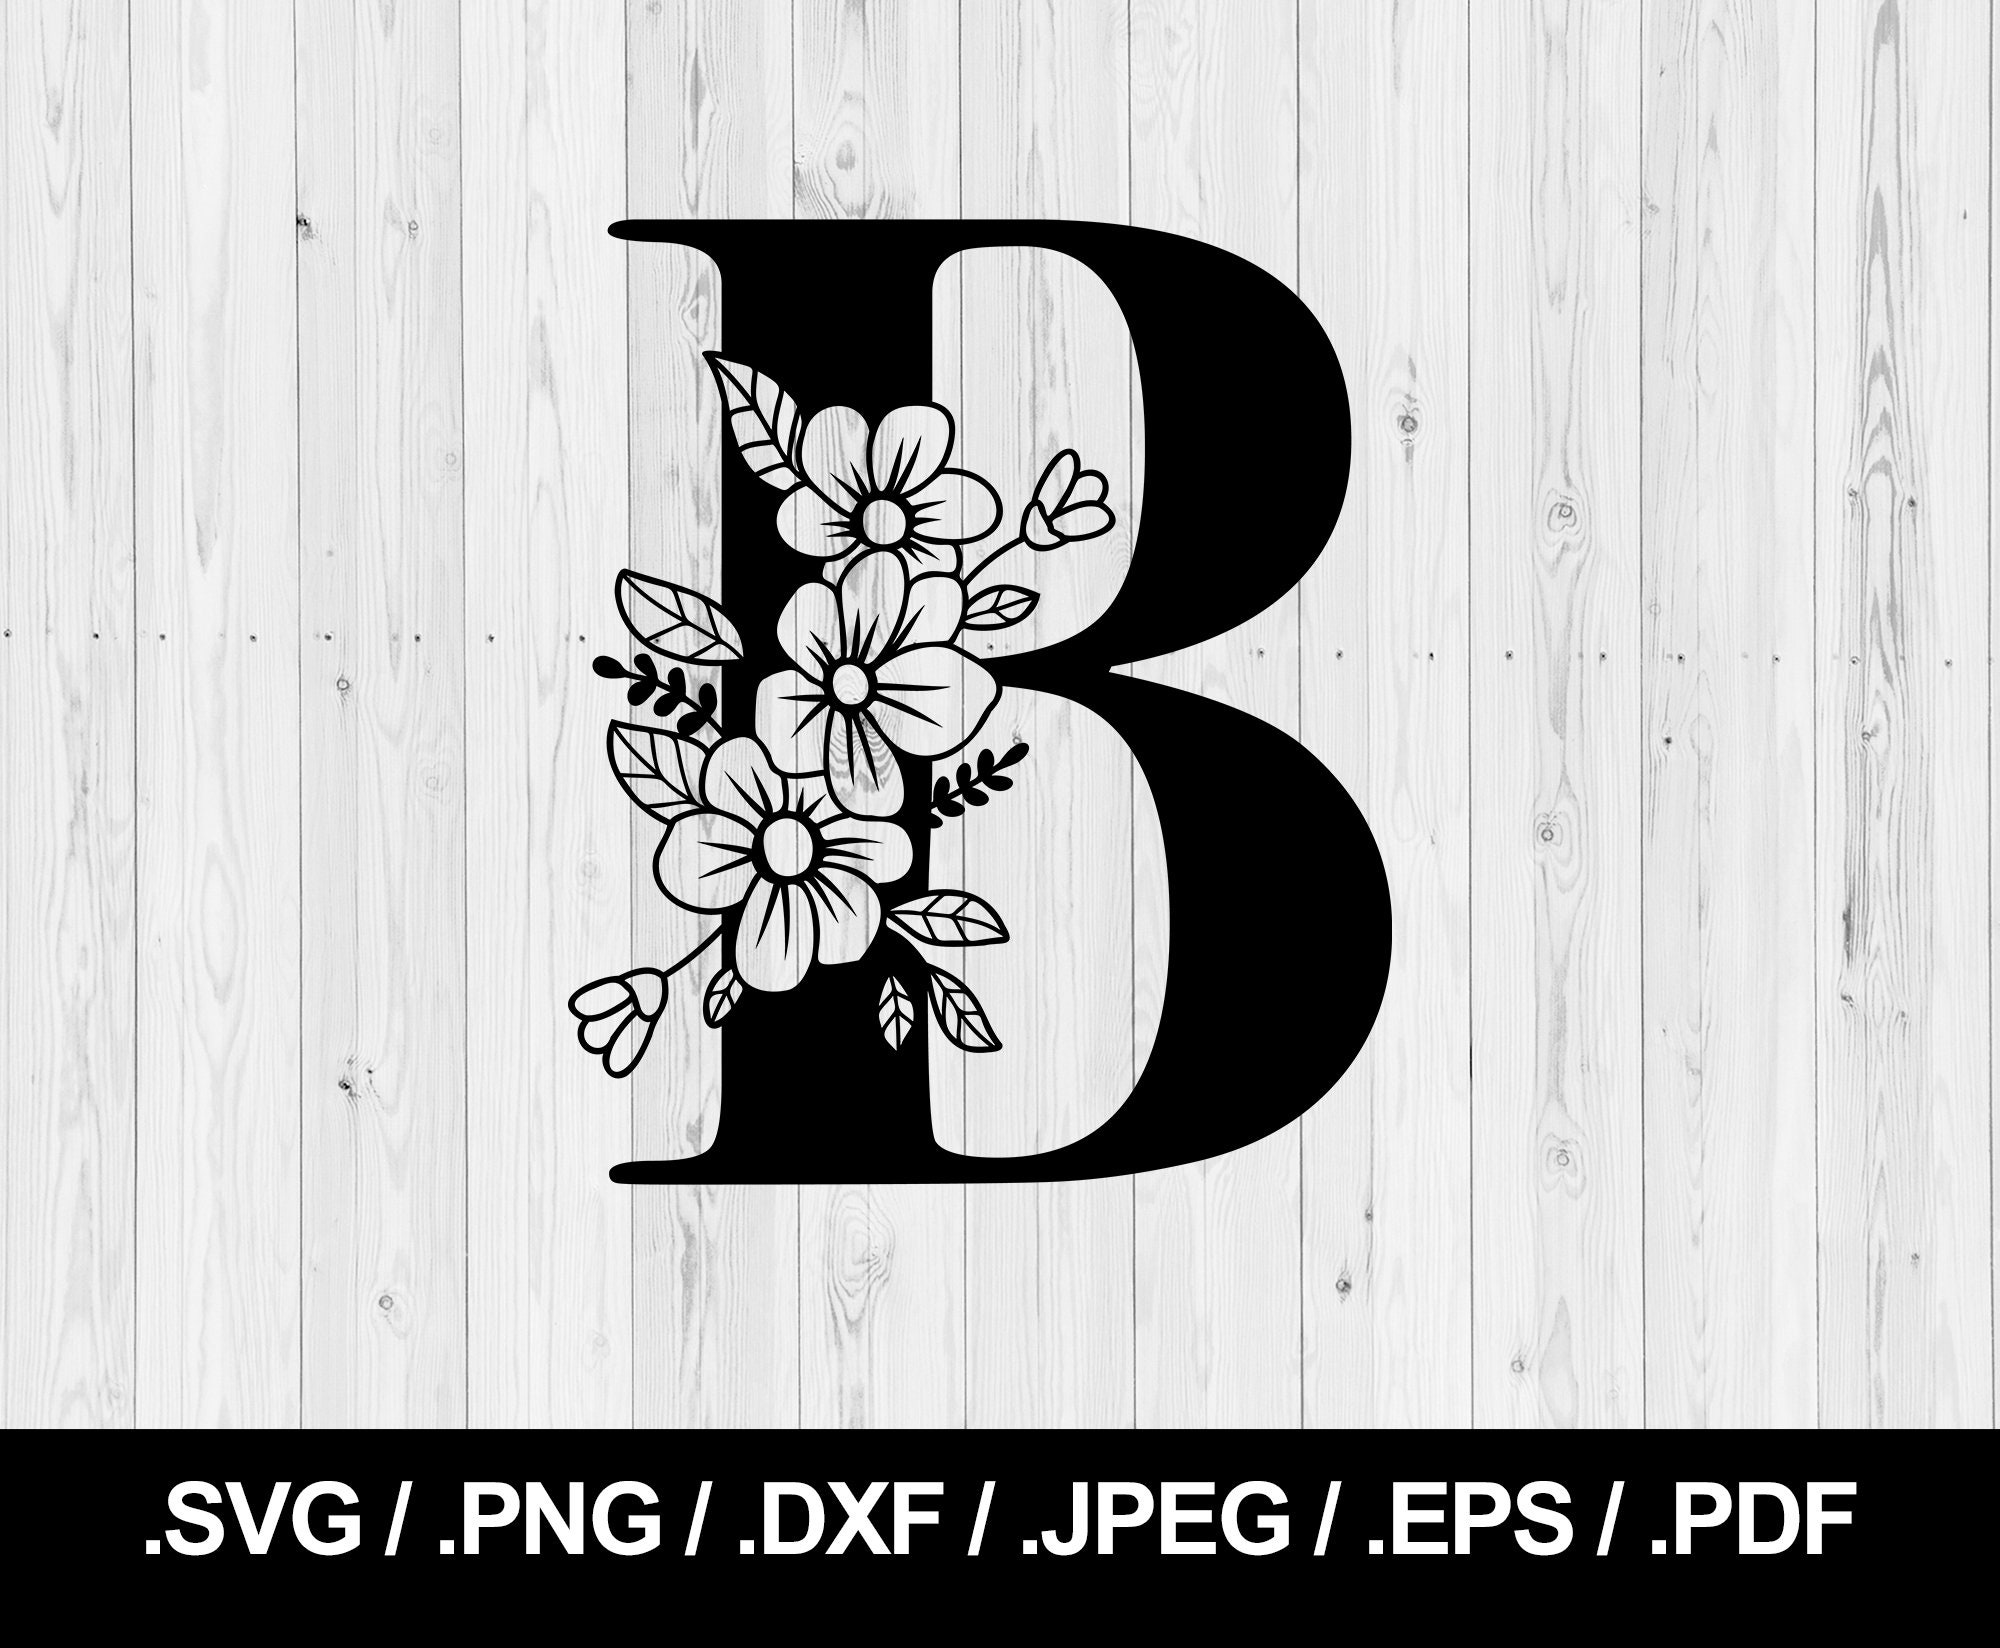  3dRose Cherry Blossom Flower Monogram Initial B